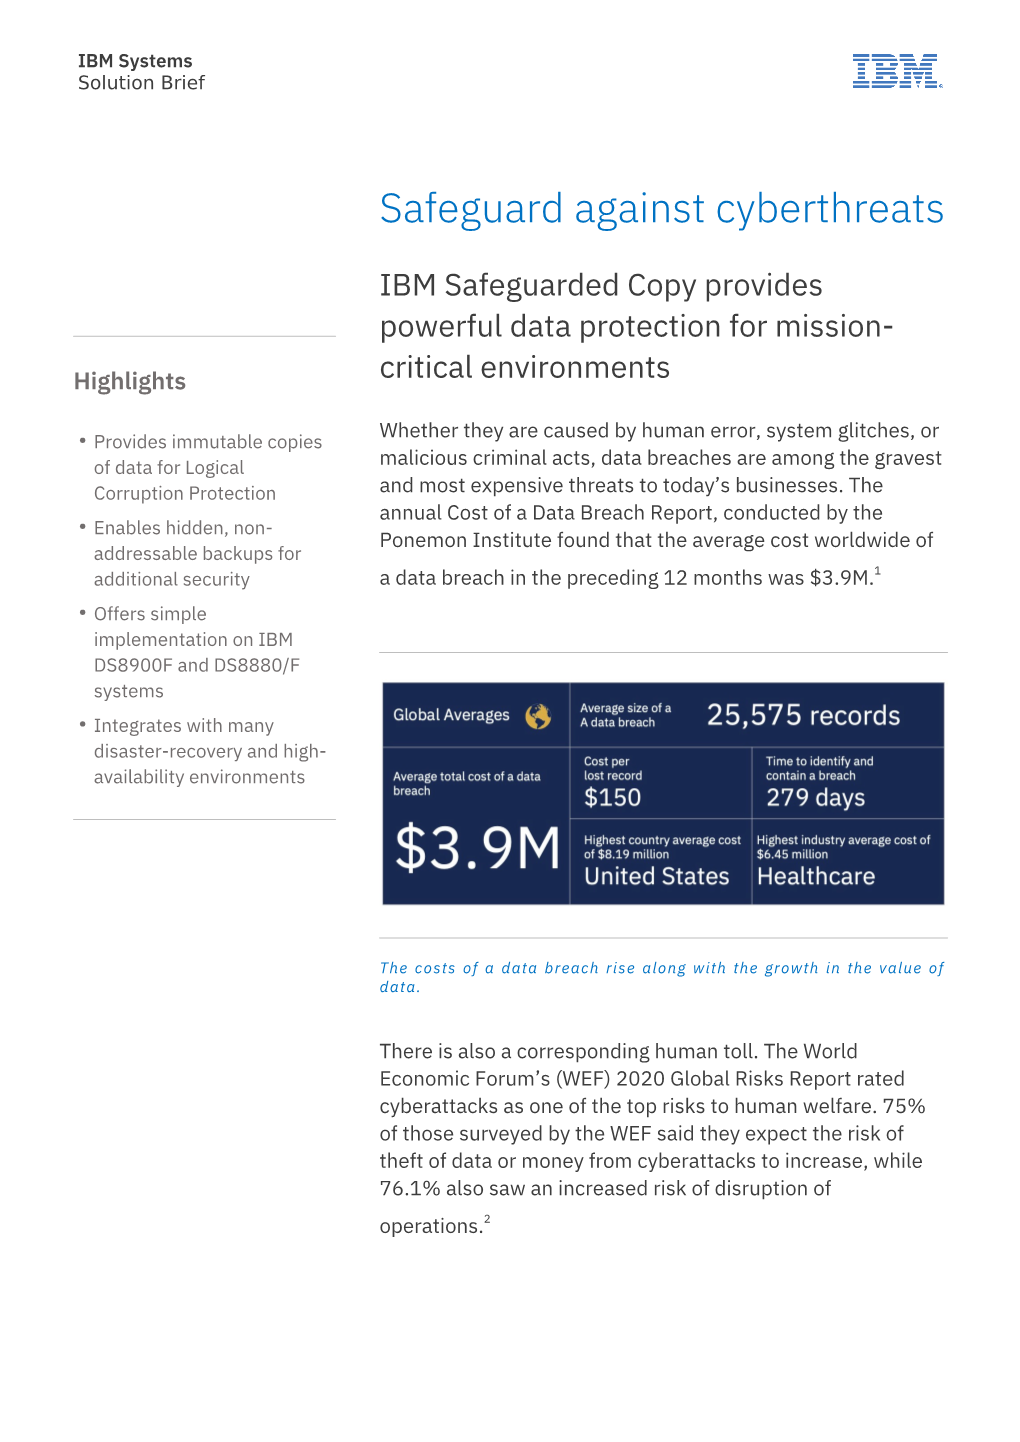 Explore IBM DS8000 Safeguarded Copy